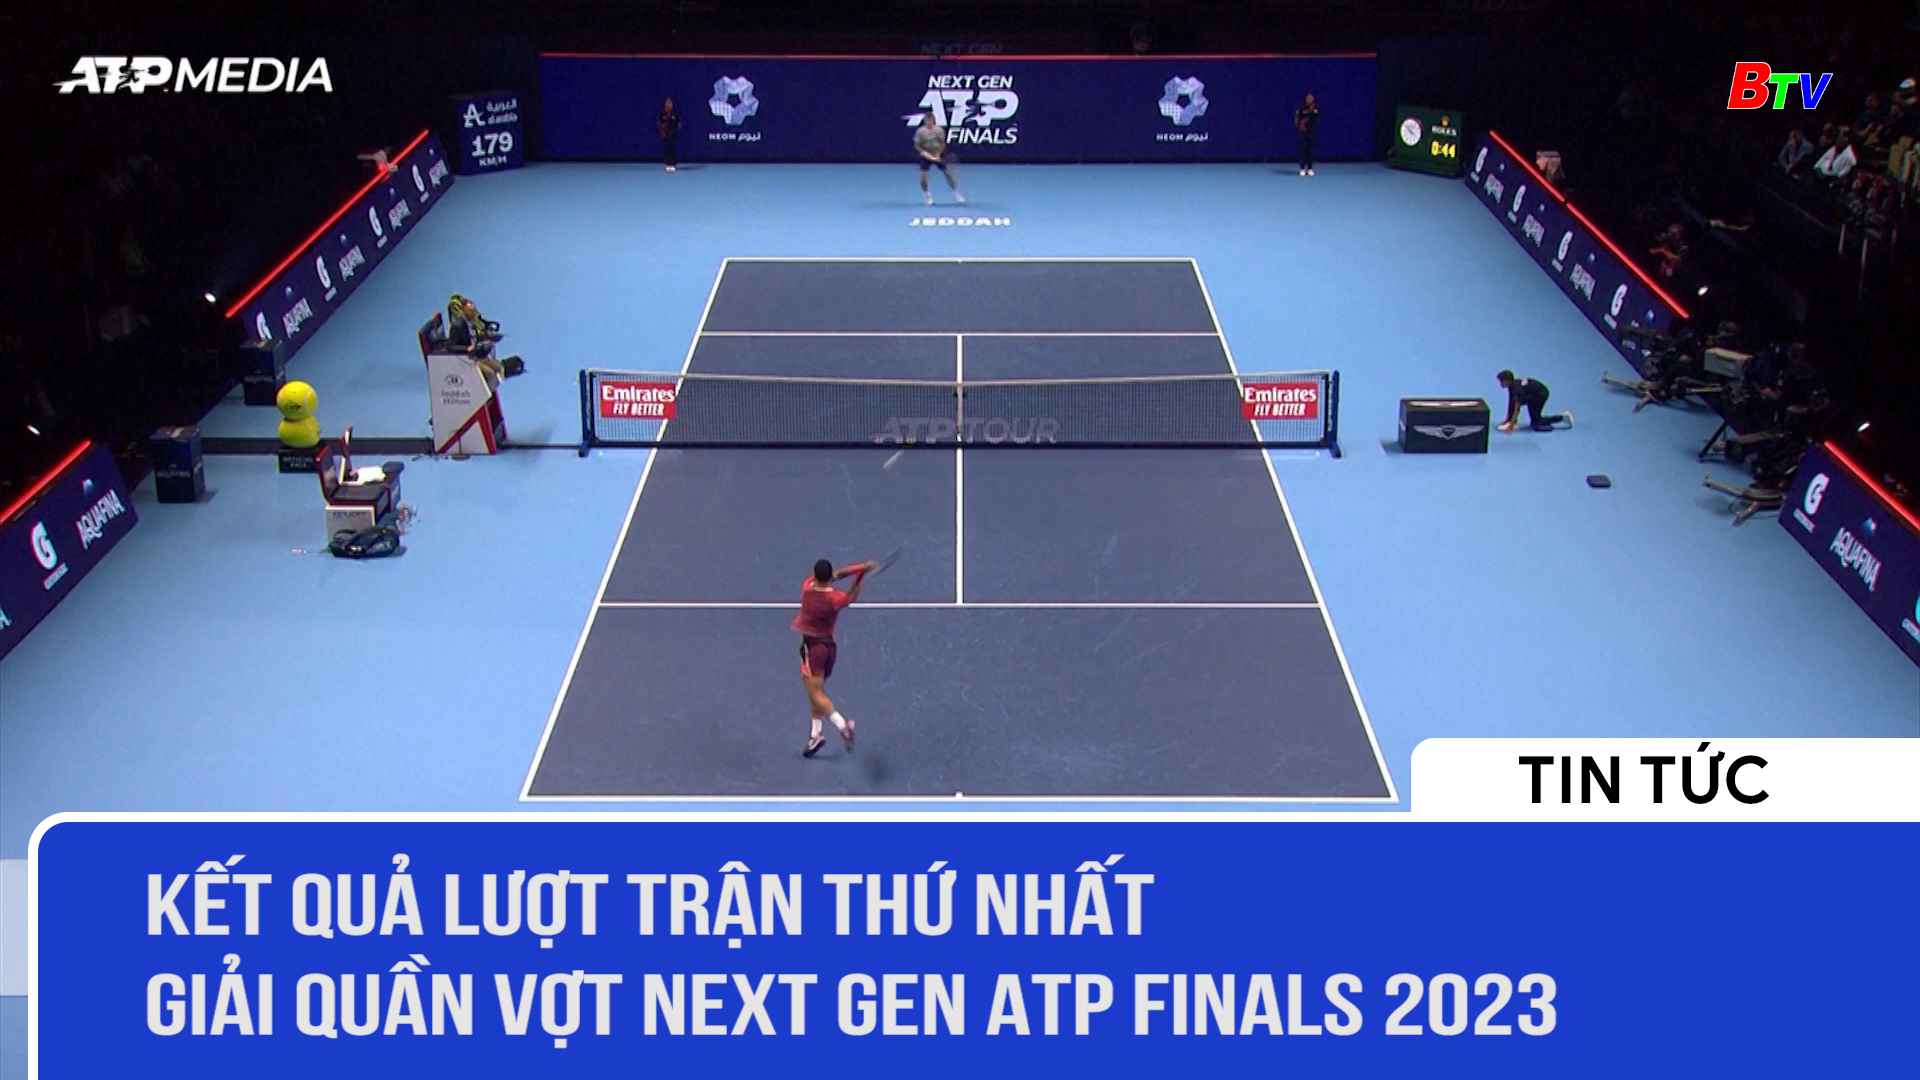 Kết quả lượt trận thứ nhất Giải quần vợt Next Gen ATP Finals 2023